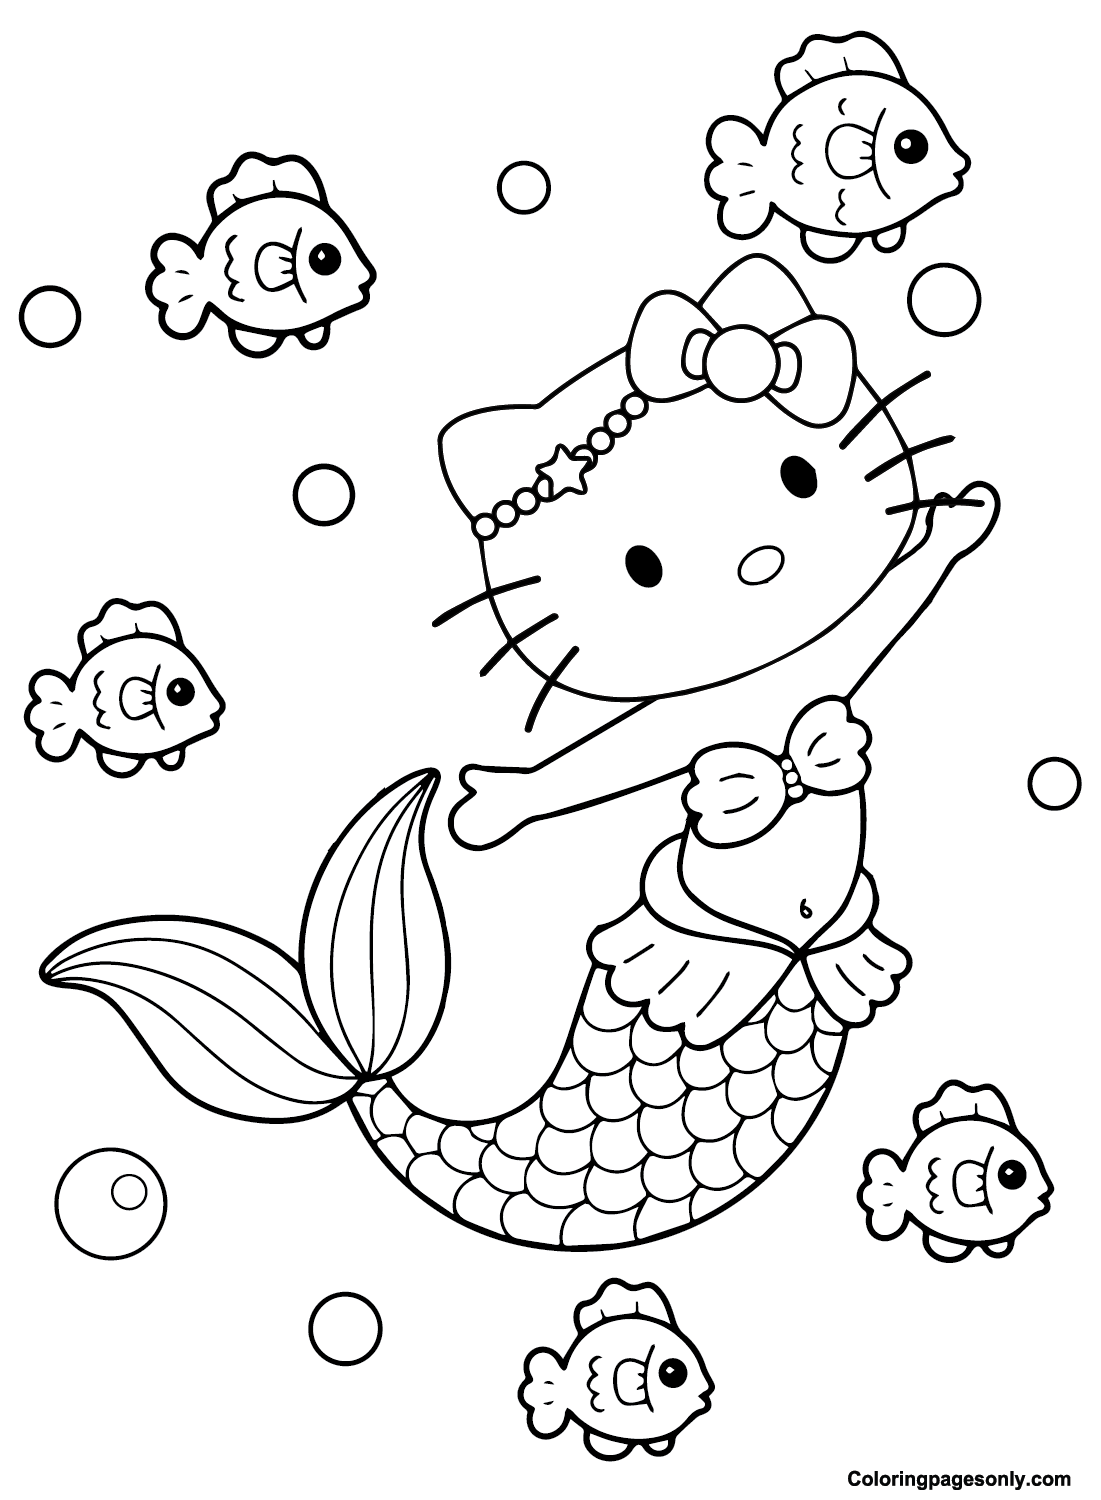 Imprimir Hello Kitty Sirena de Hello Kitty Sirena